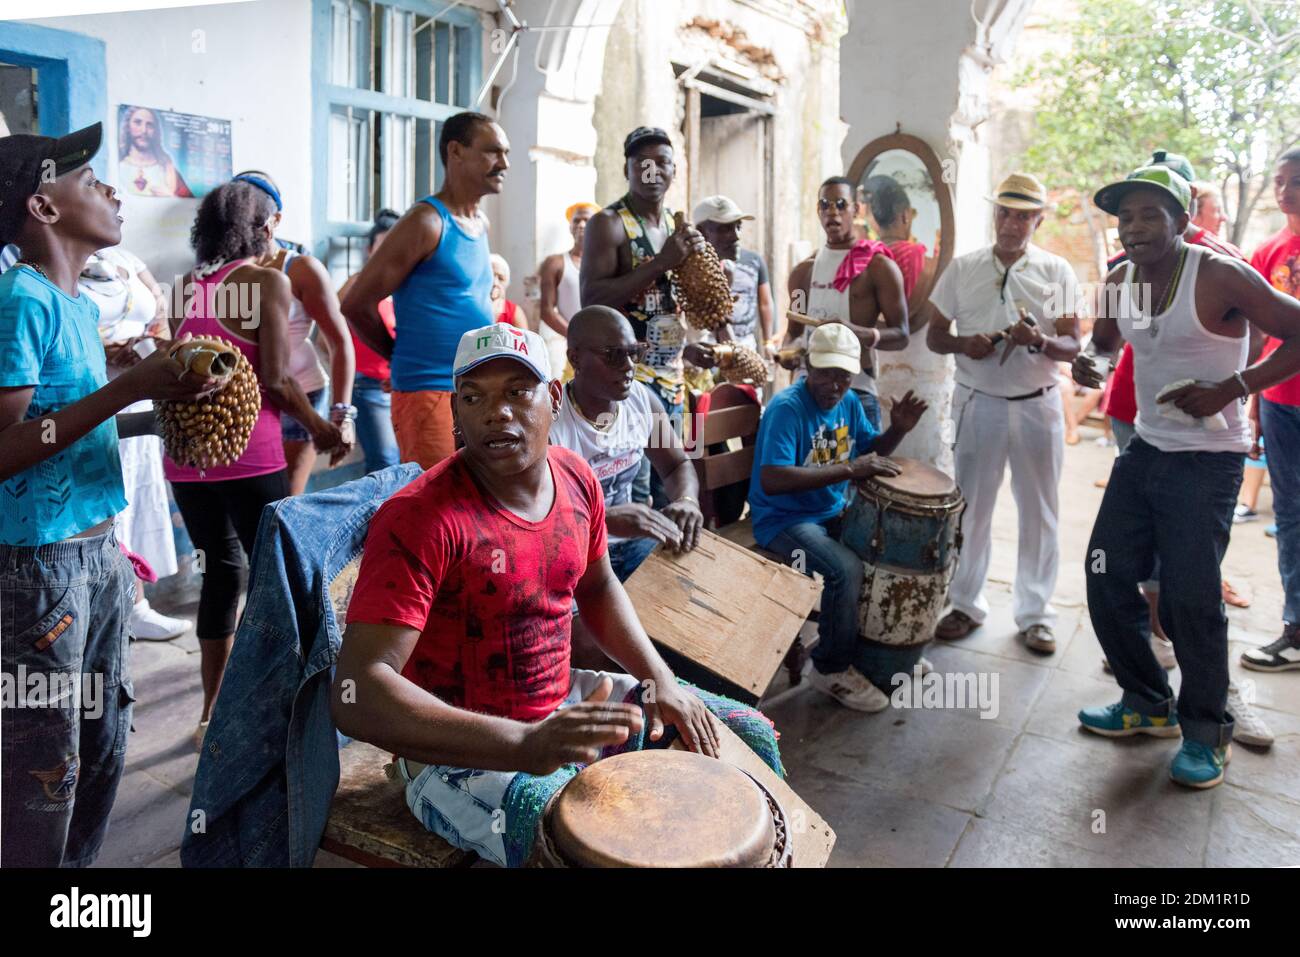 Santeria religion followers drumming and making music in Trinidad, Cuba Stock Photo